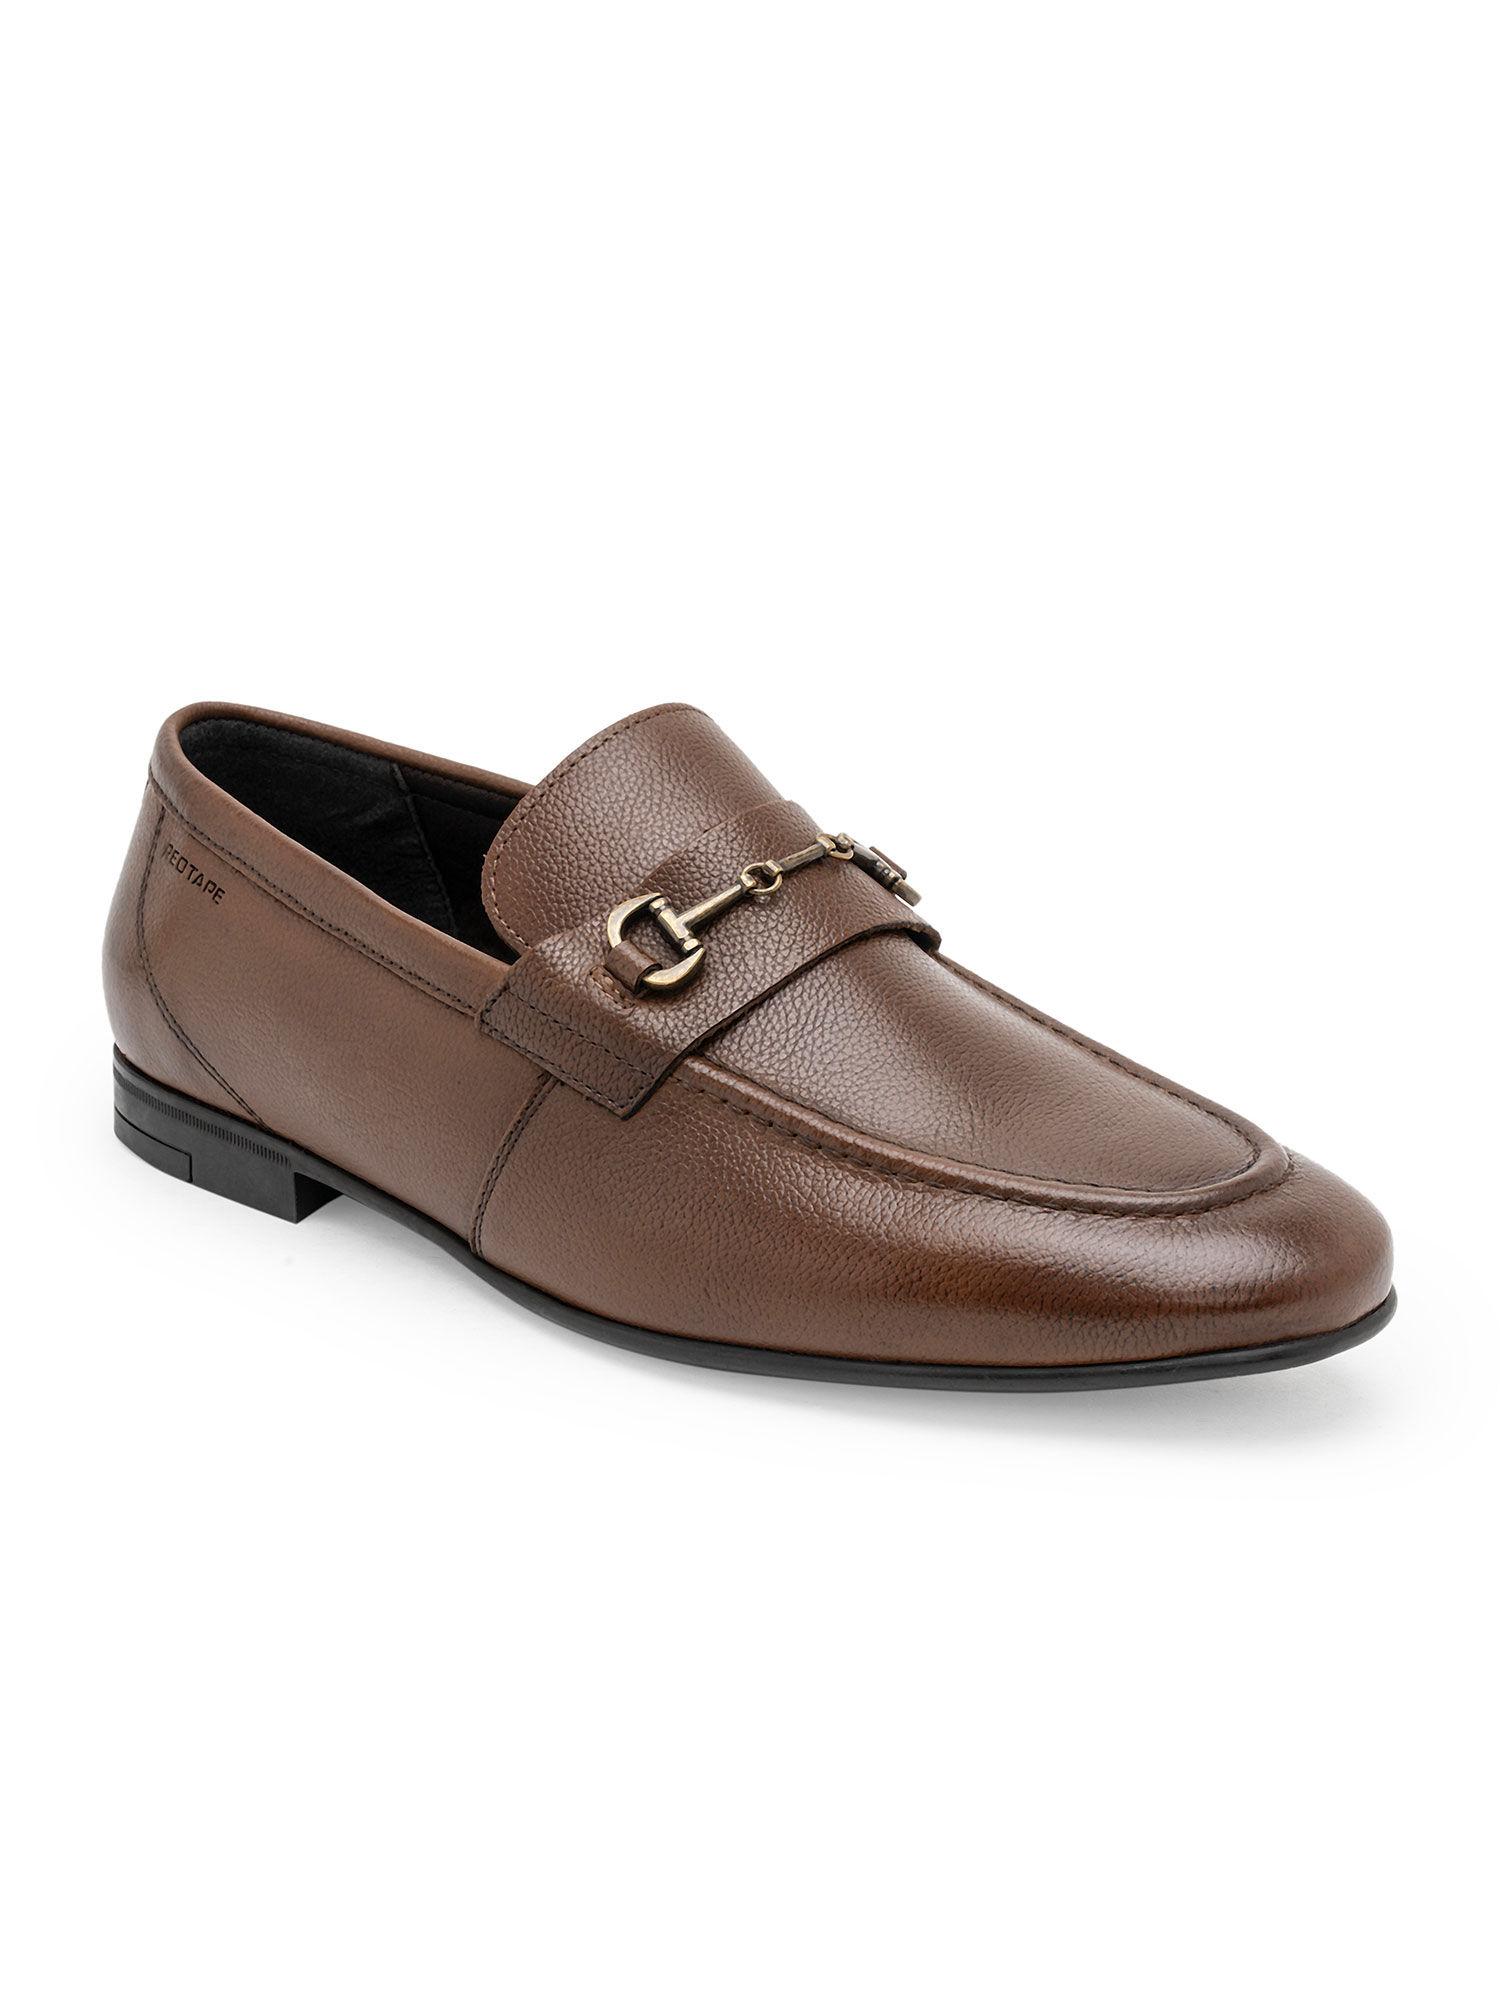 mens solid teak genuine leather formal loafers